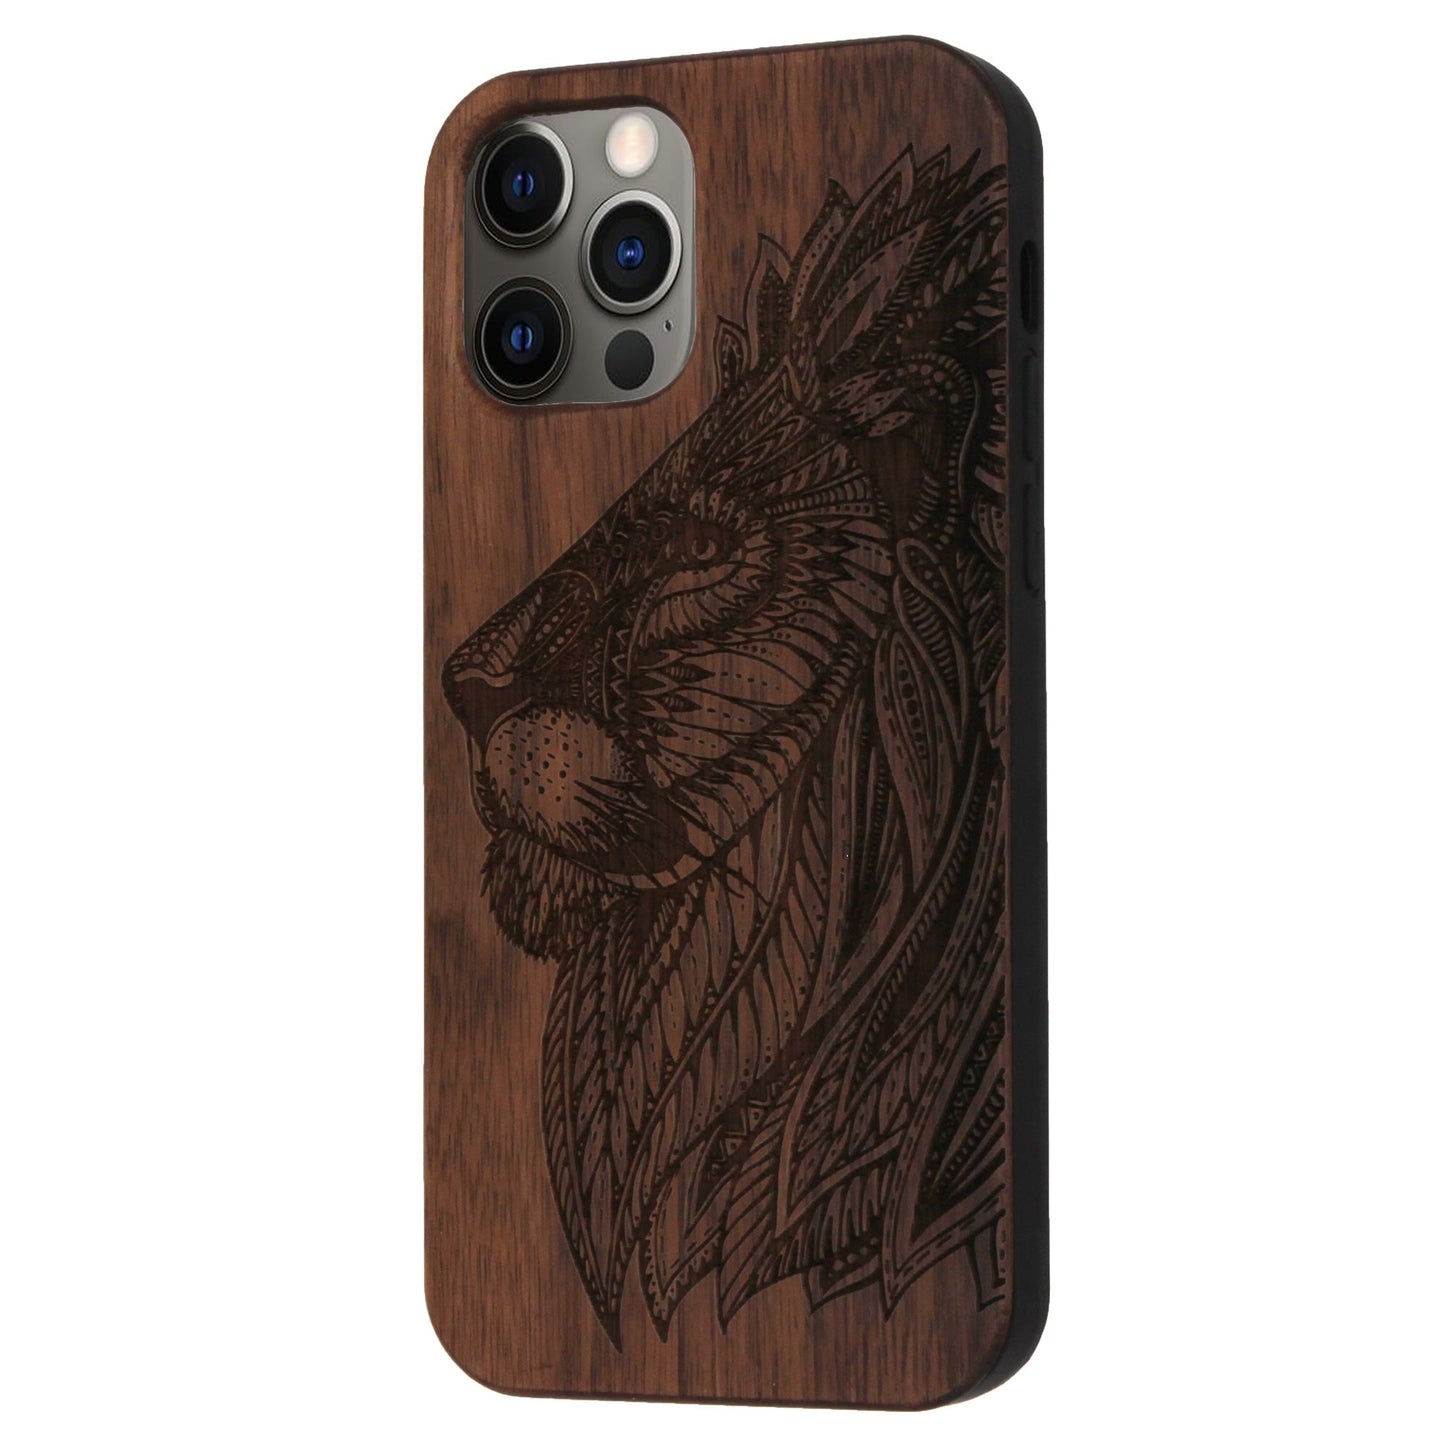 Walnut lion Eden case for iPhone 12 Pro Max